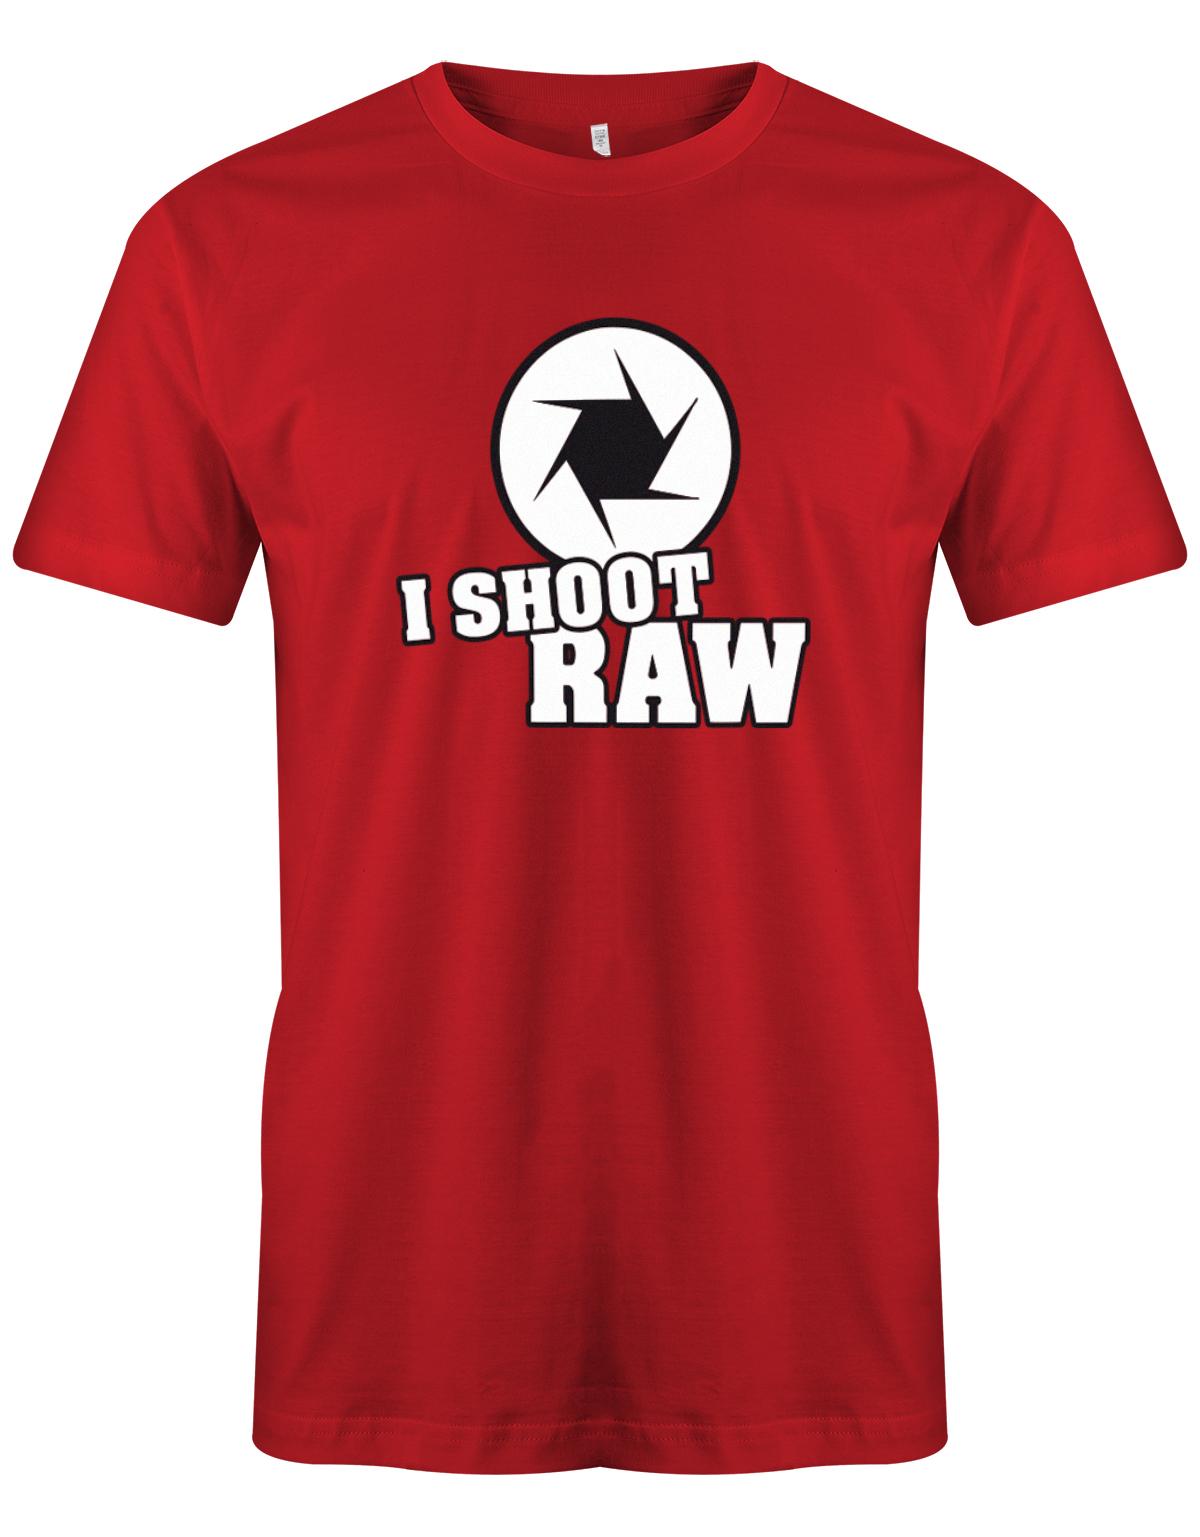 Fotografen Shirt - I Shoot Raw - Fotografen Linse Rot